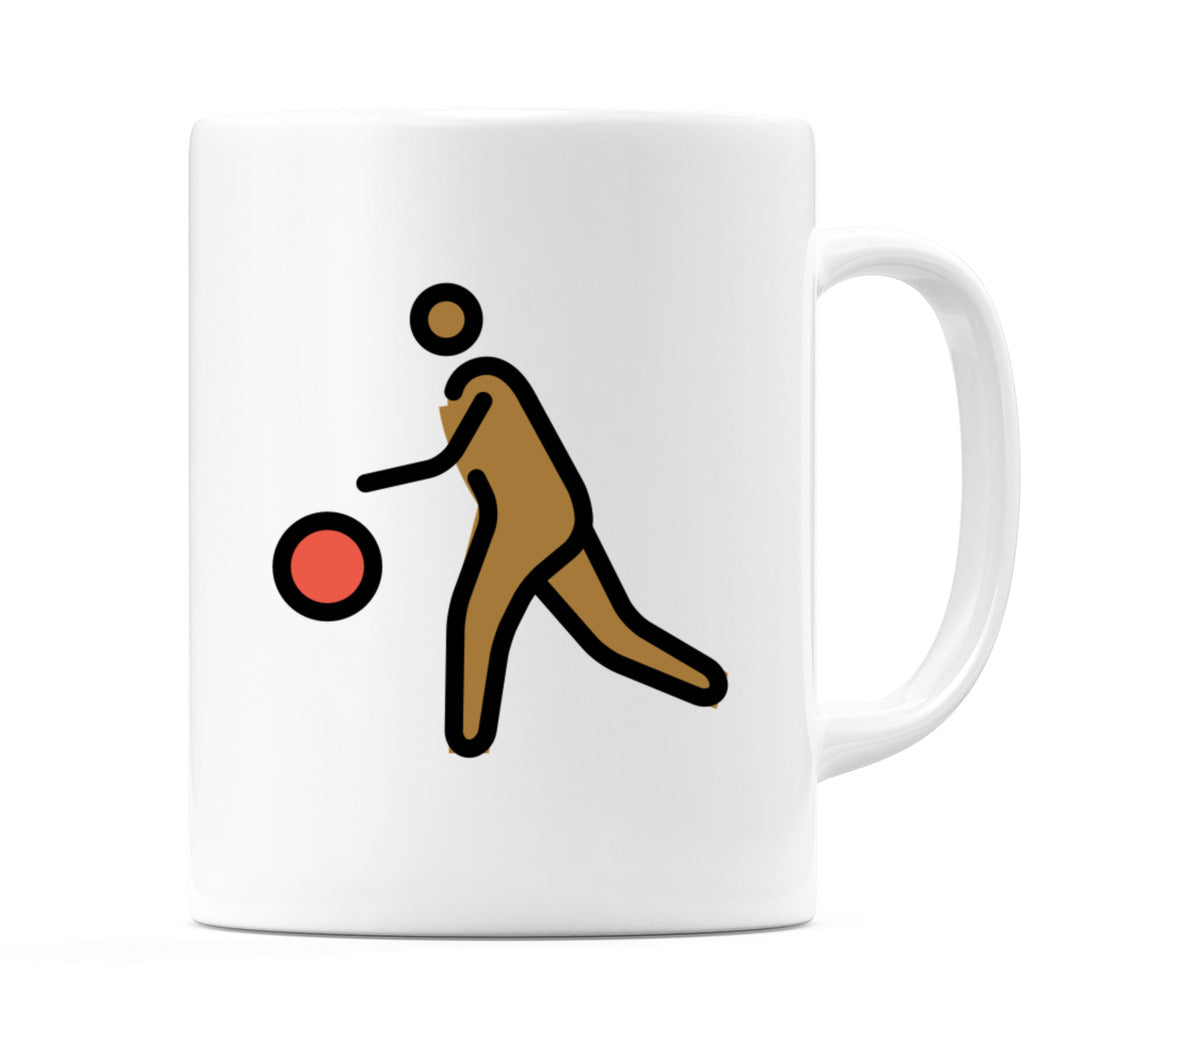 Person Bouncing Ball: Medium-Dark Skin Tone Emoji Mug